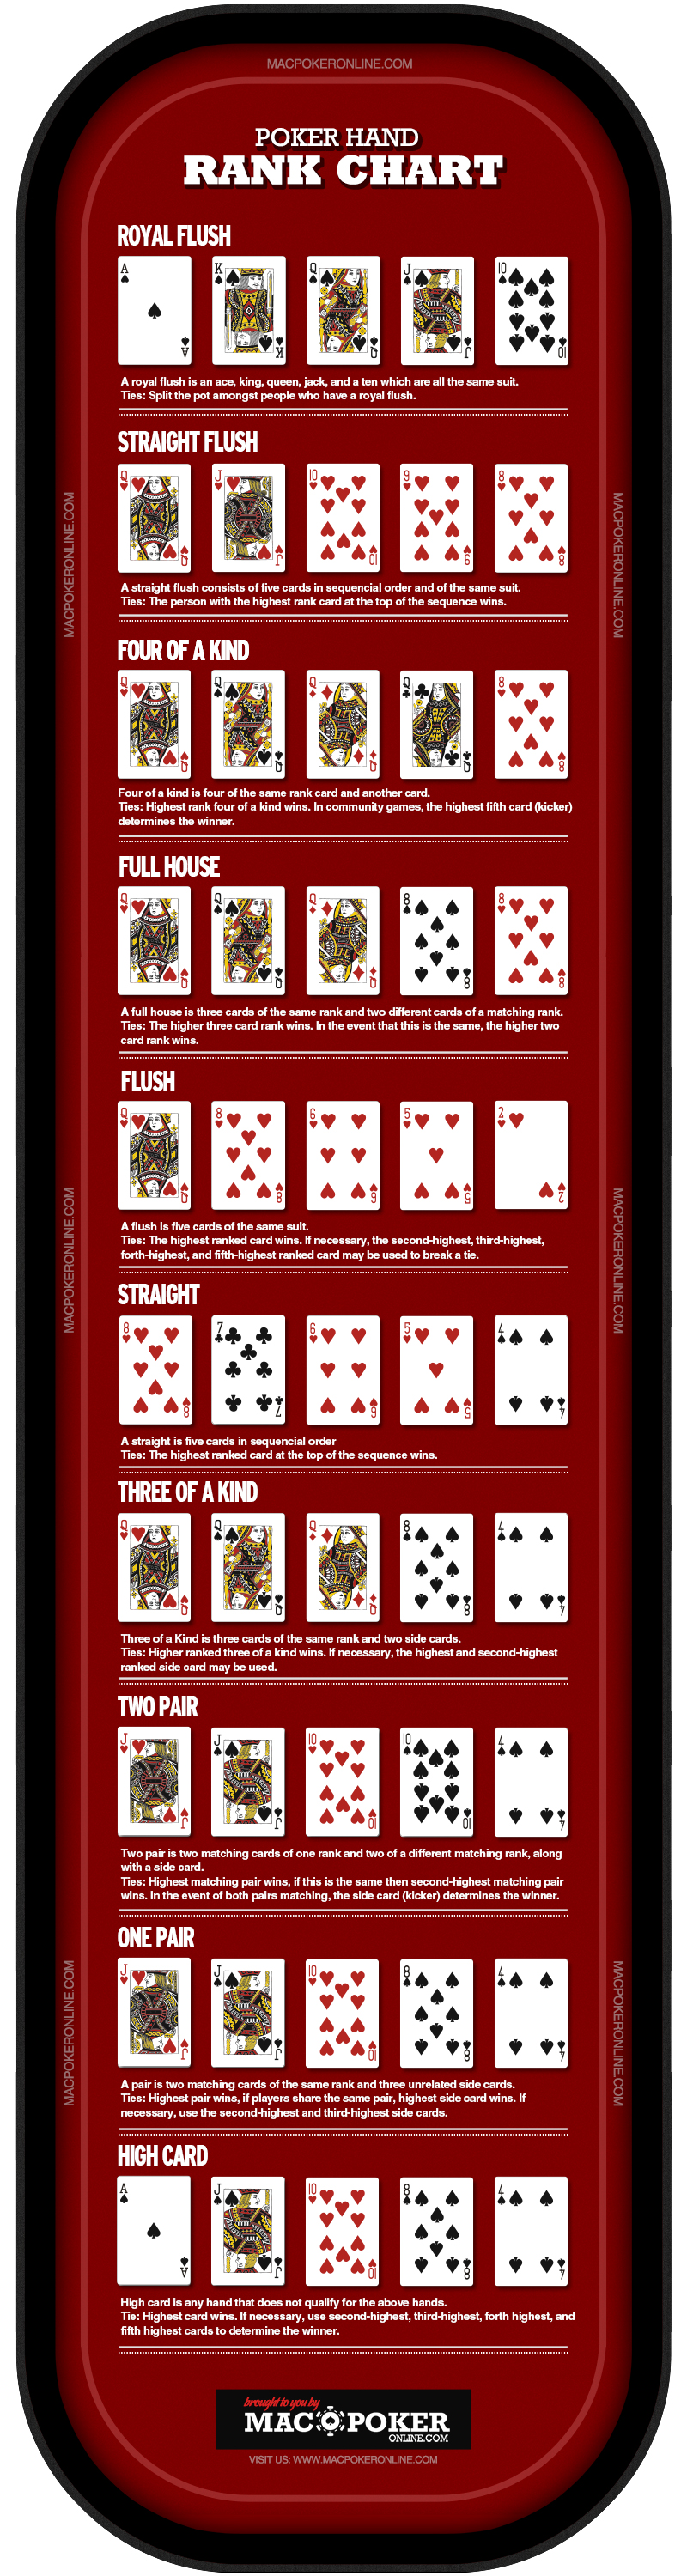 Poker Hand Chart · Poker Hand Ranking List ·